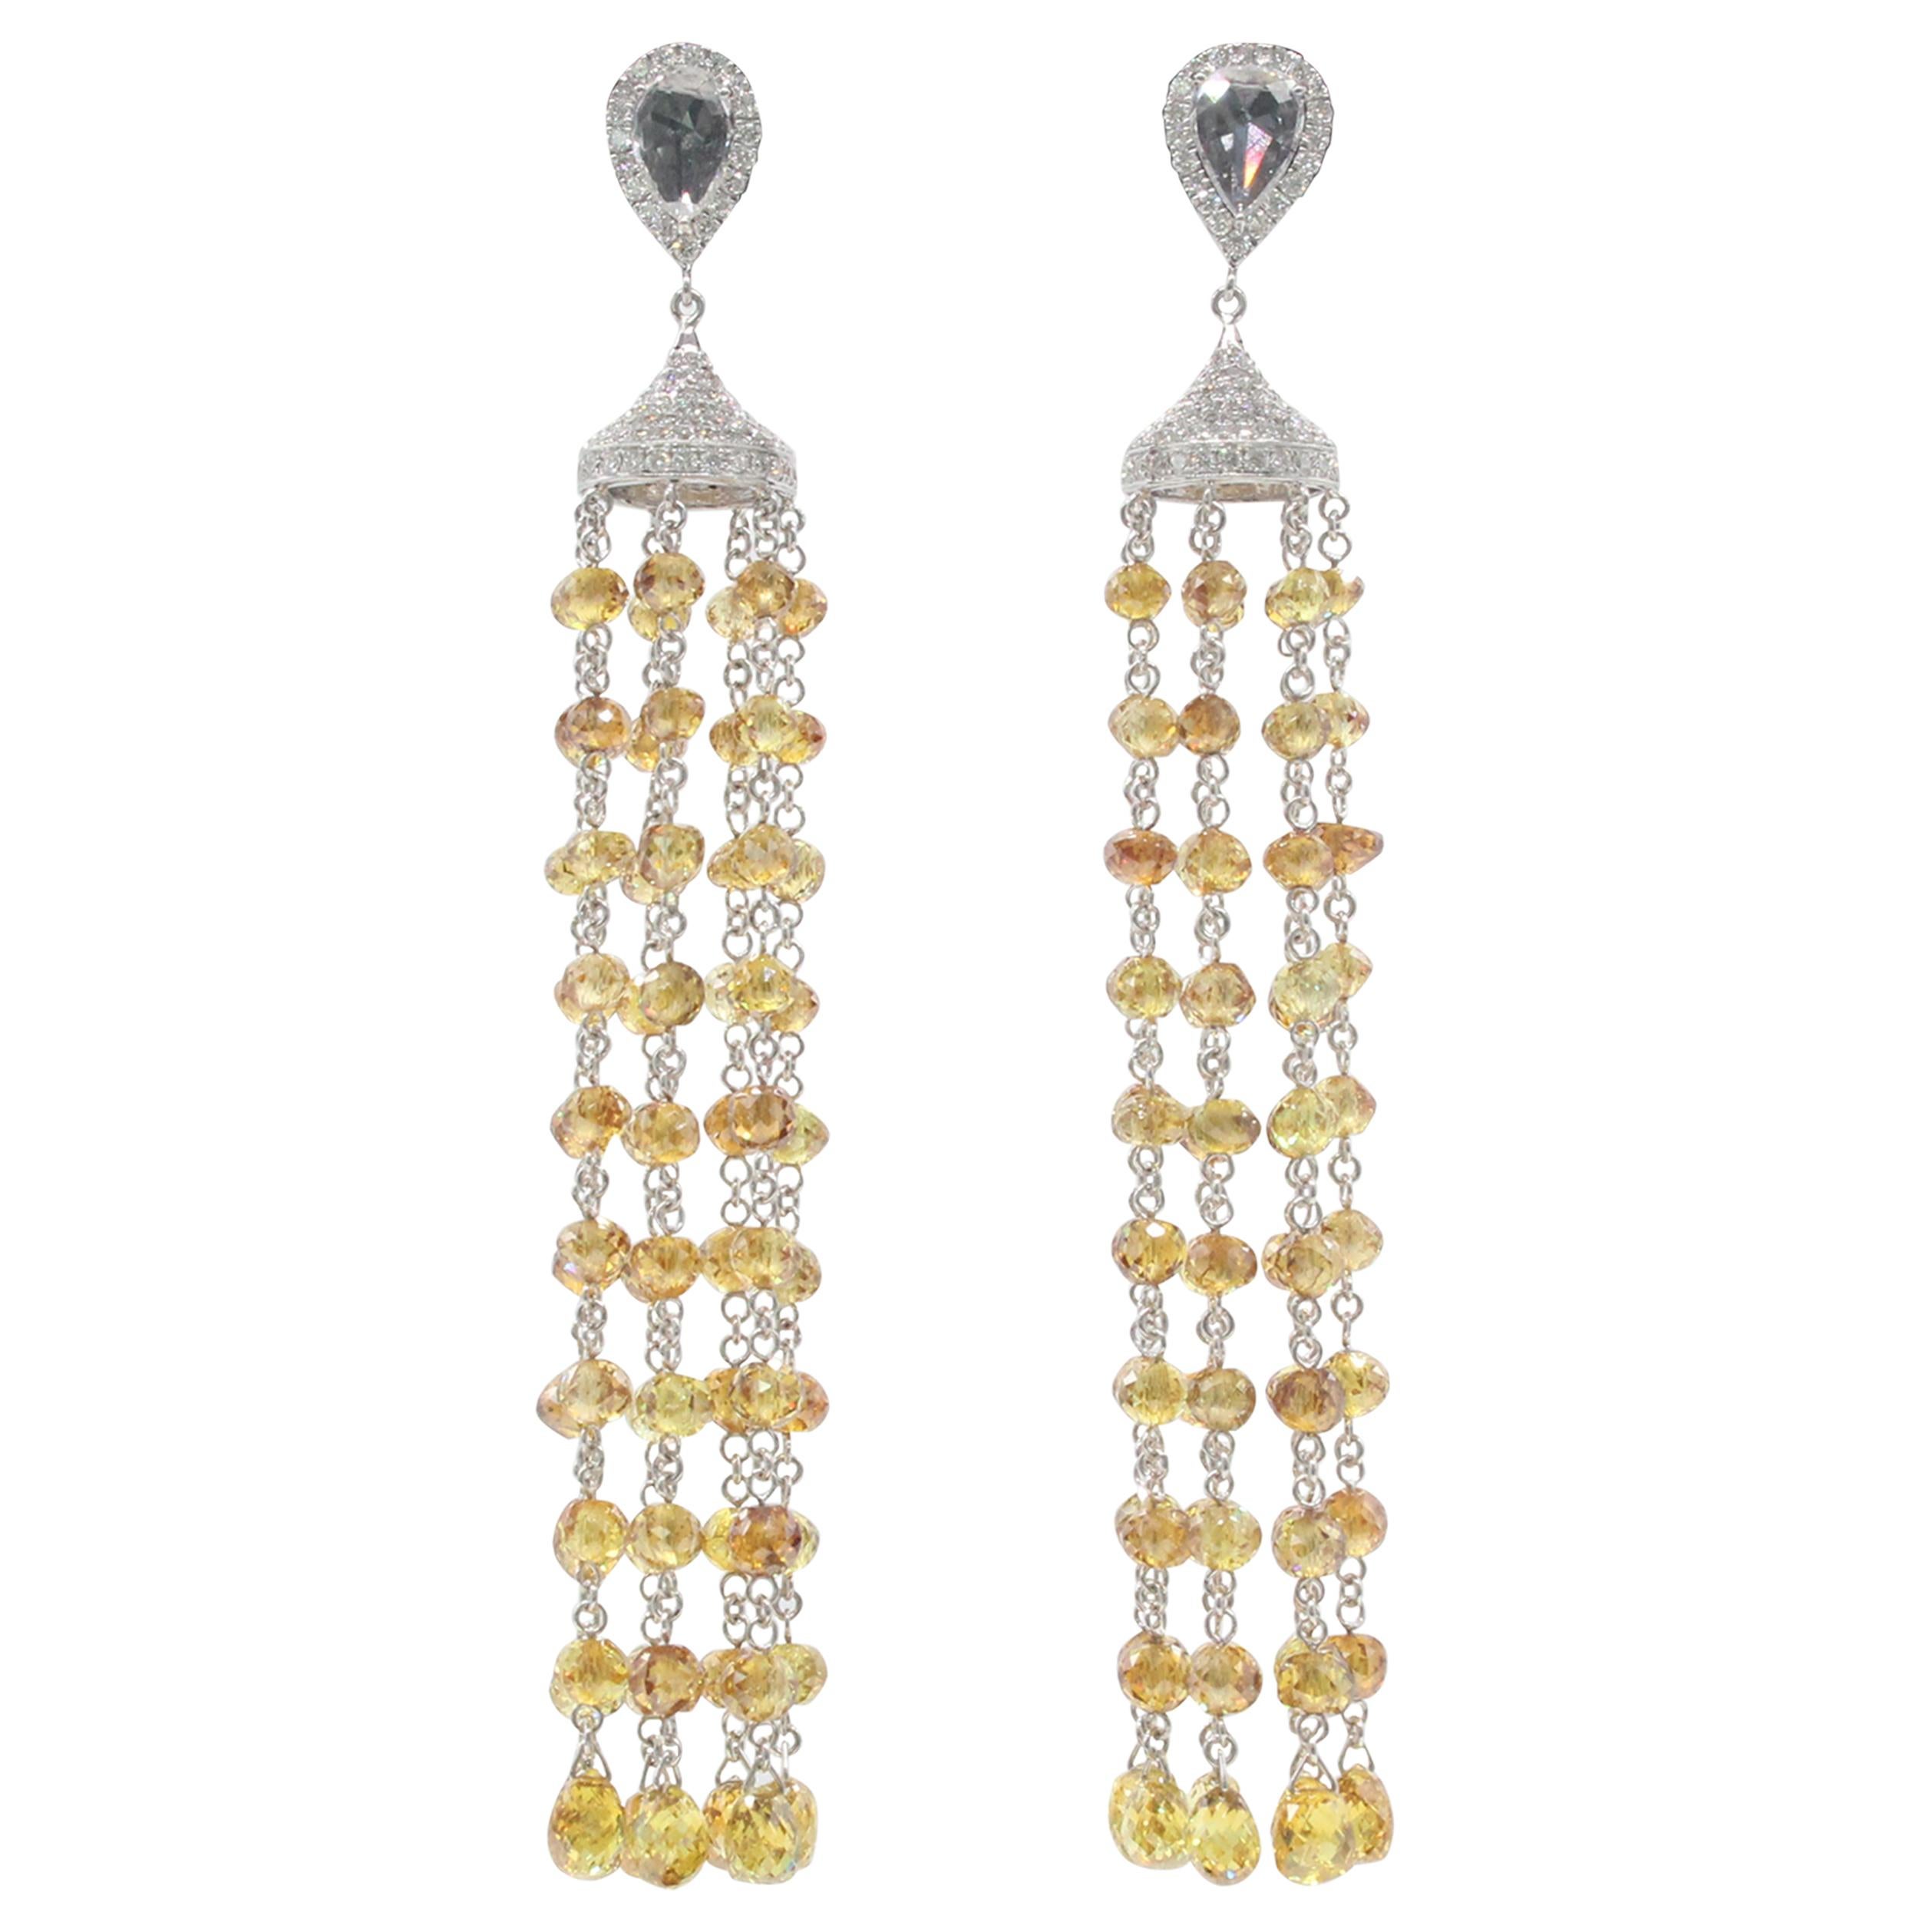 PANIM 40 Carat Fancy Color Diamond Beads Cocktail Earrings 18 Karat White Gold For Sale